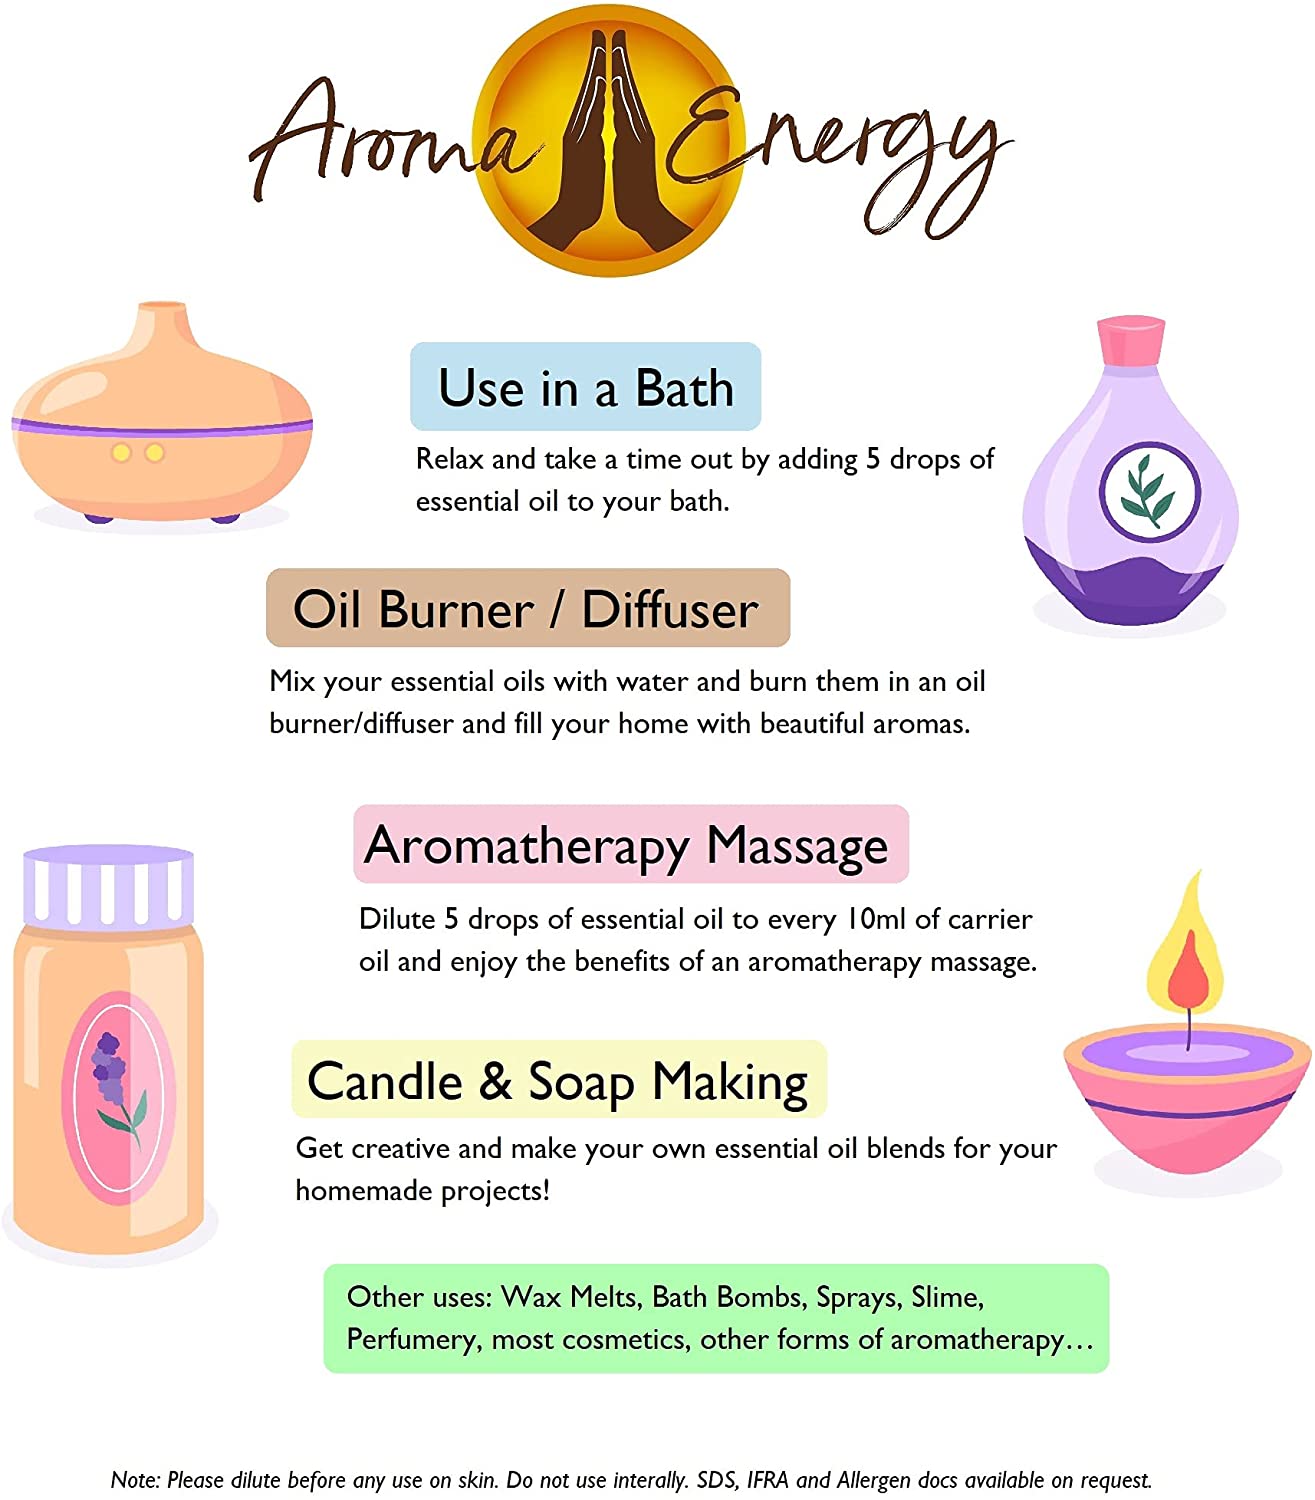 Hot Flush Life Essential Oil - Aroma Energy